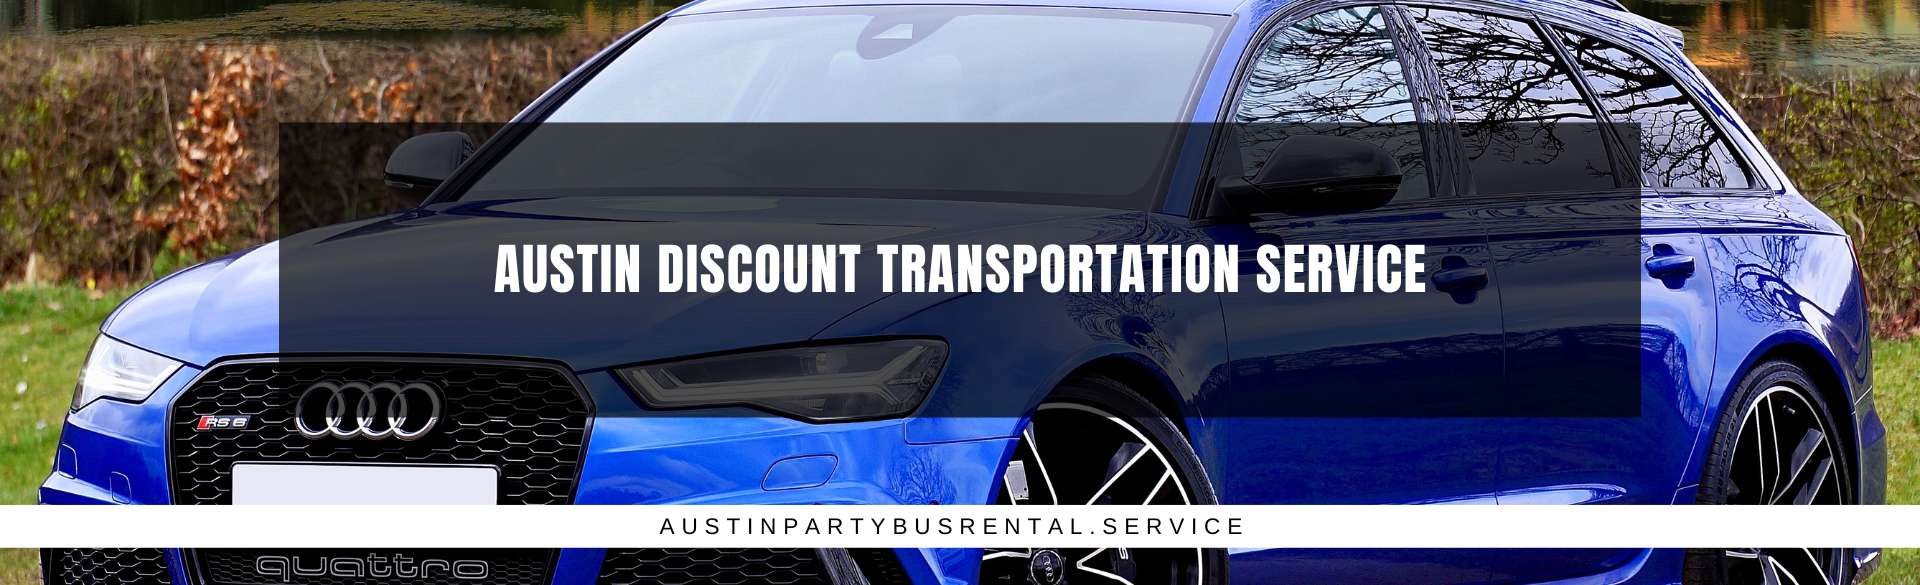 Austin Discount Transportation Service